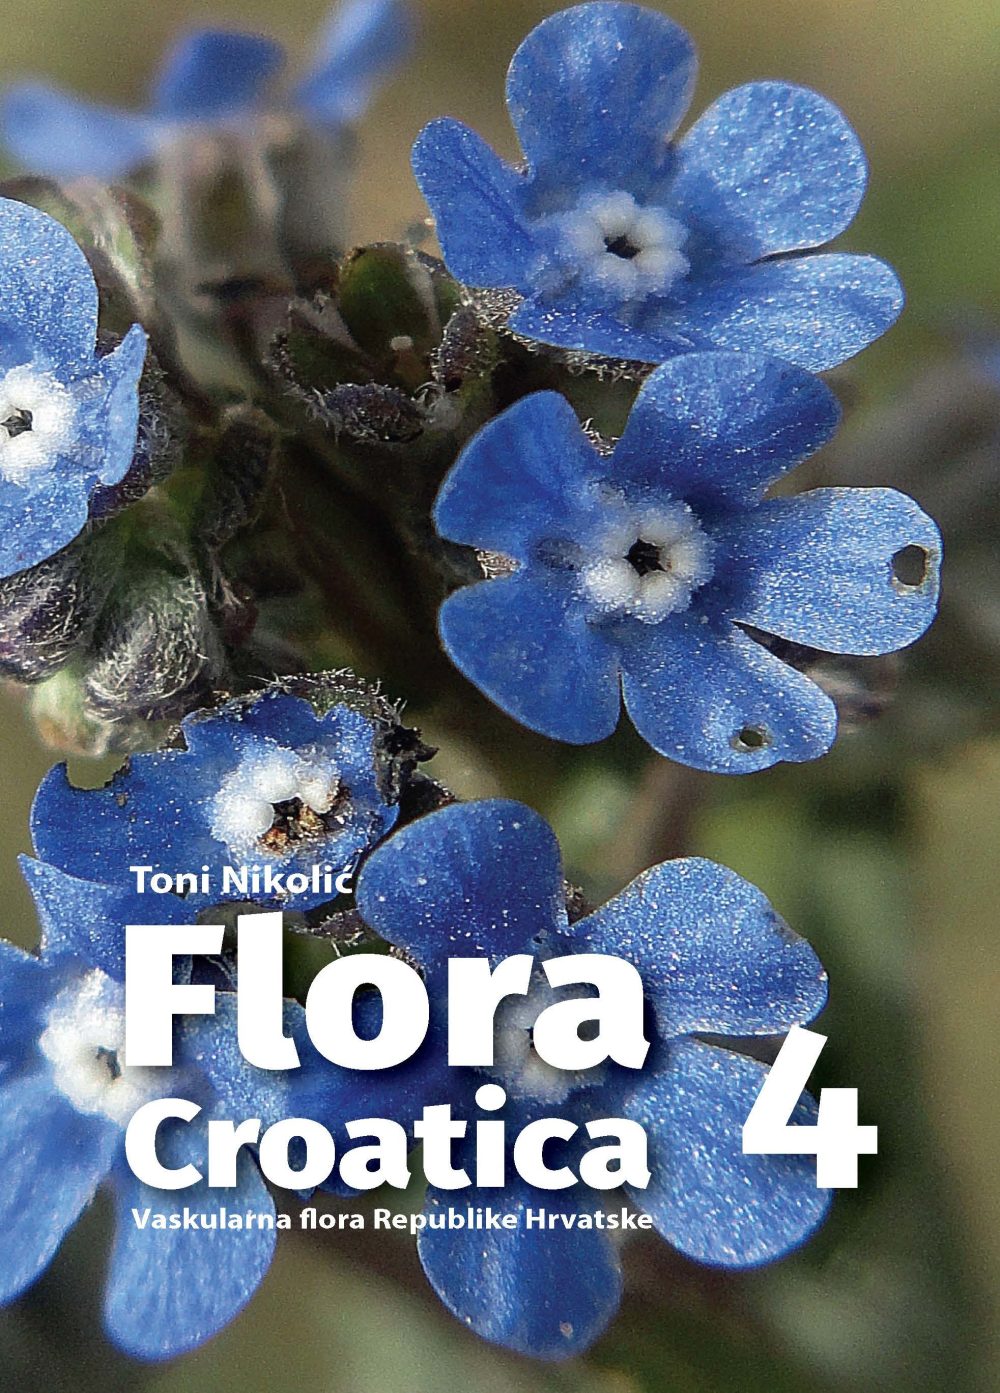 Flora croatica 4